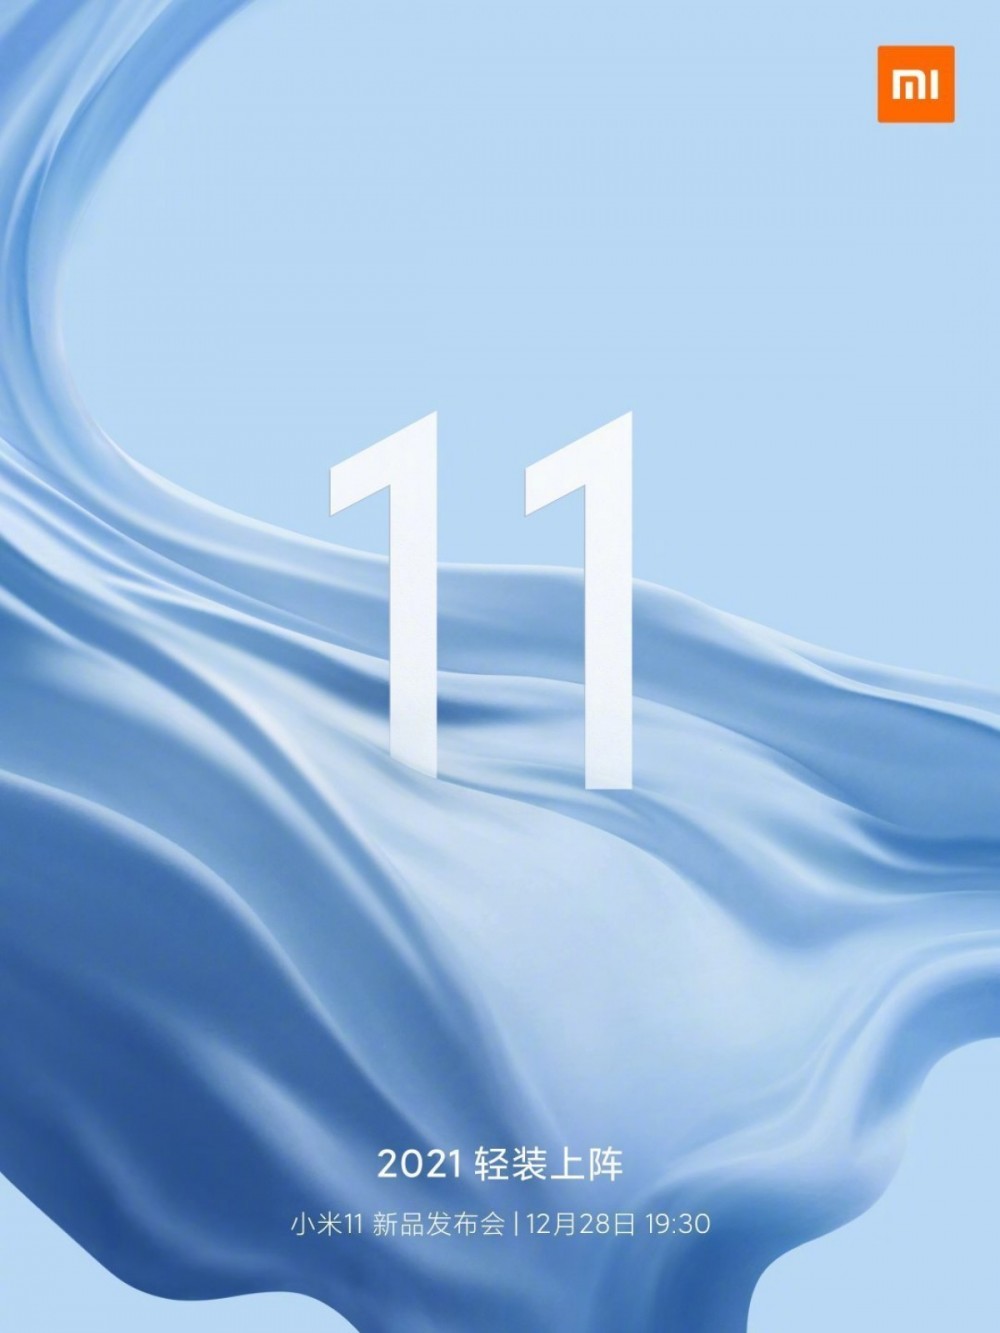 Xiaomi Mi 11 officially arriving on December 28